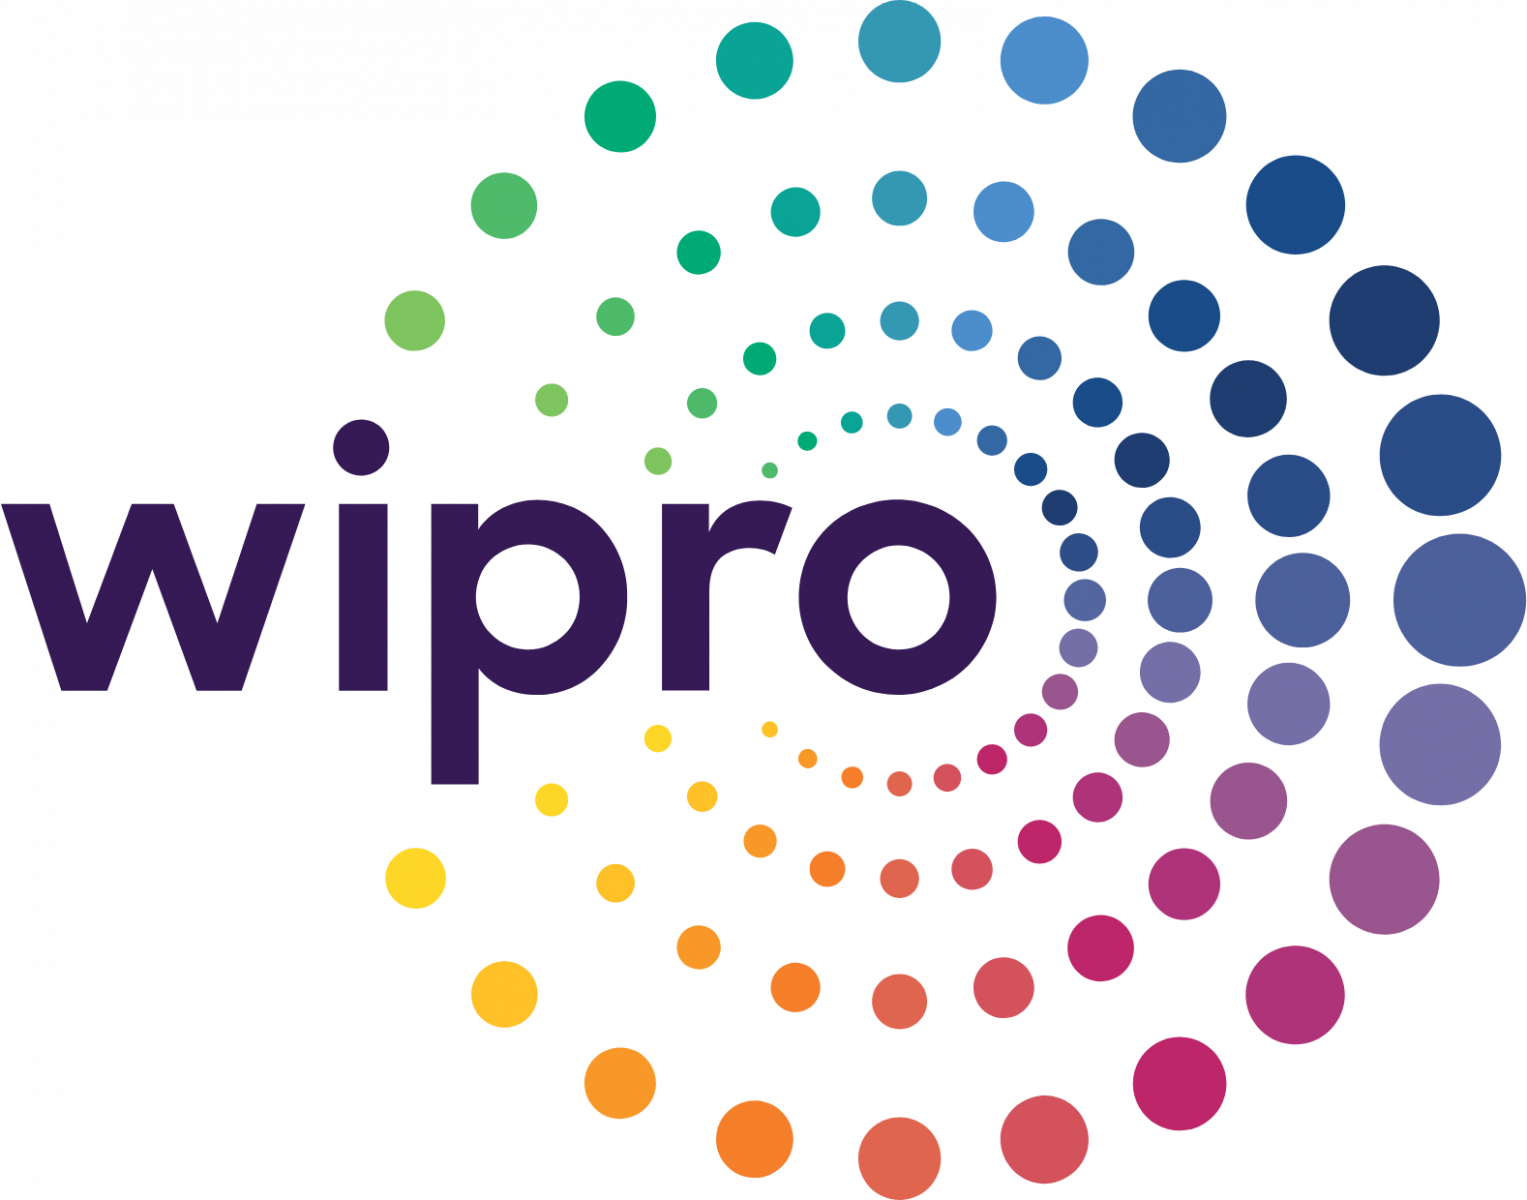 Wipro it companies in Durgapur